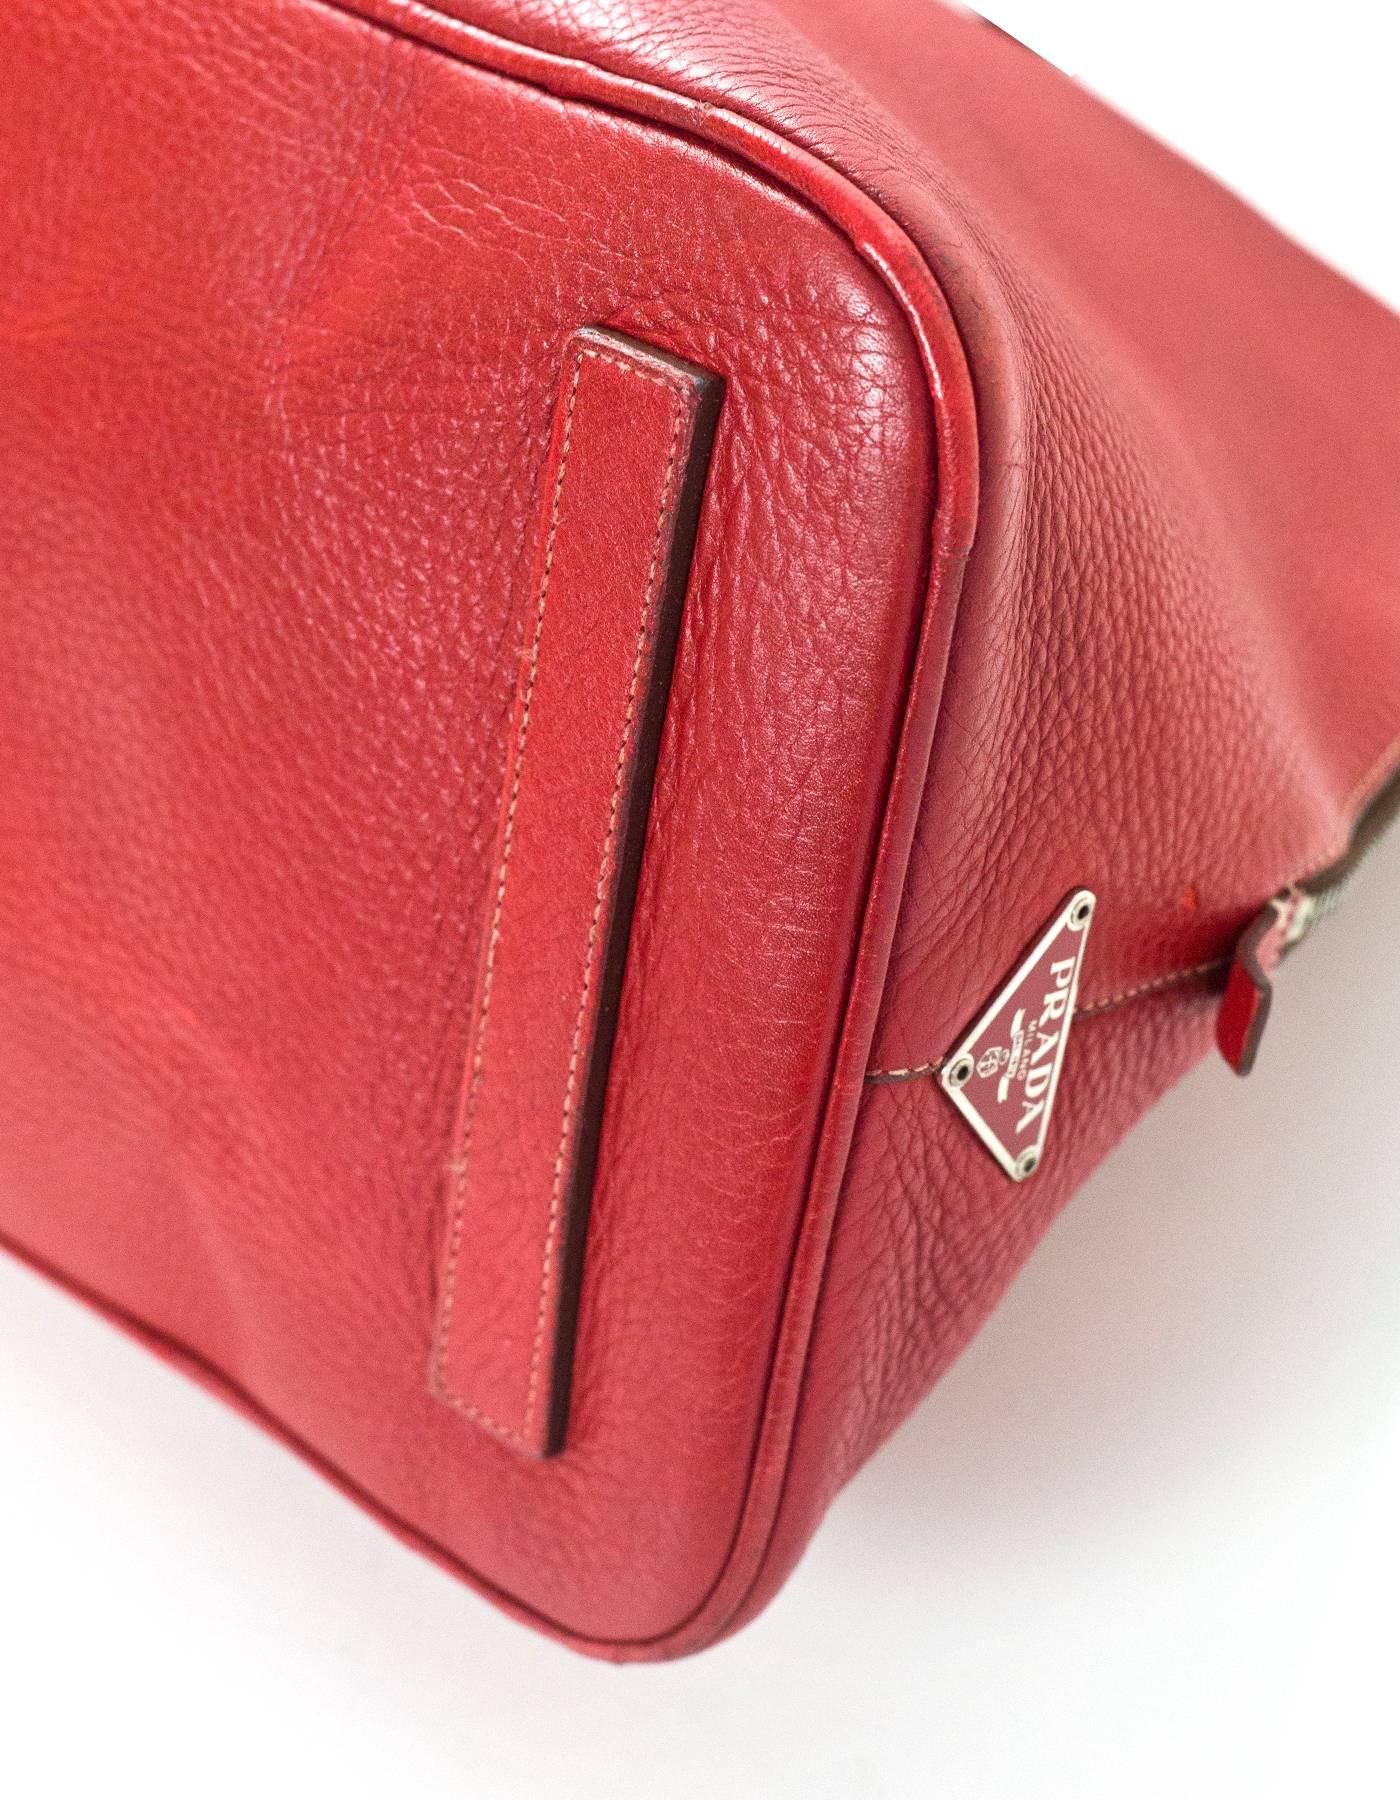 Prada Red Leather Zip Around Shoulder Bag  1